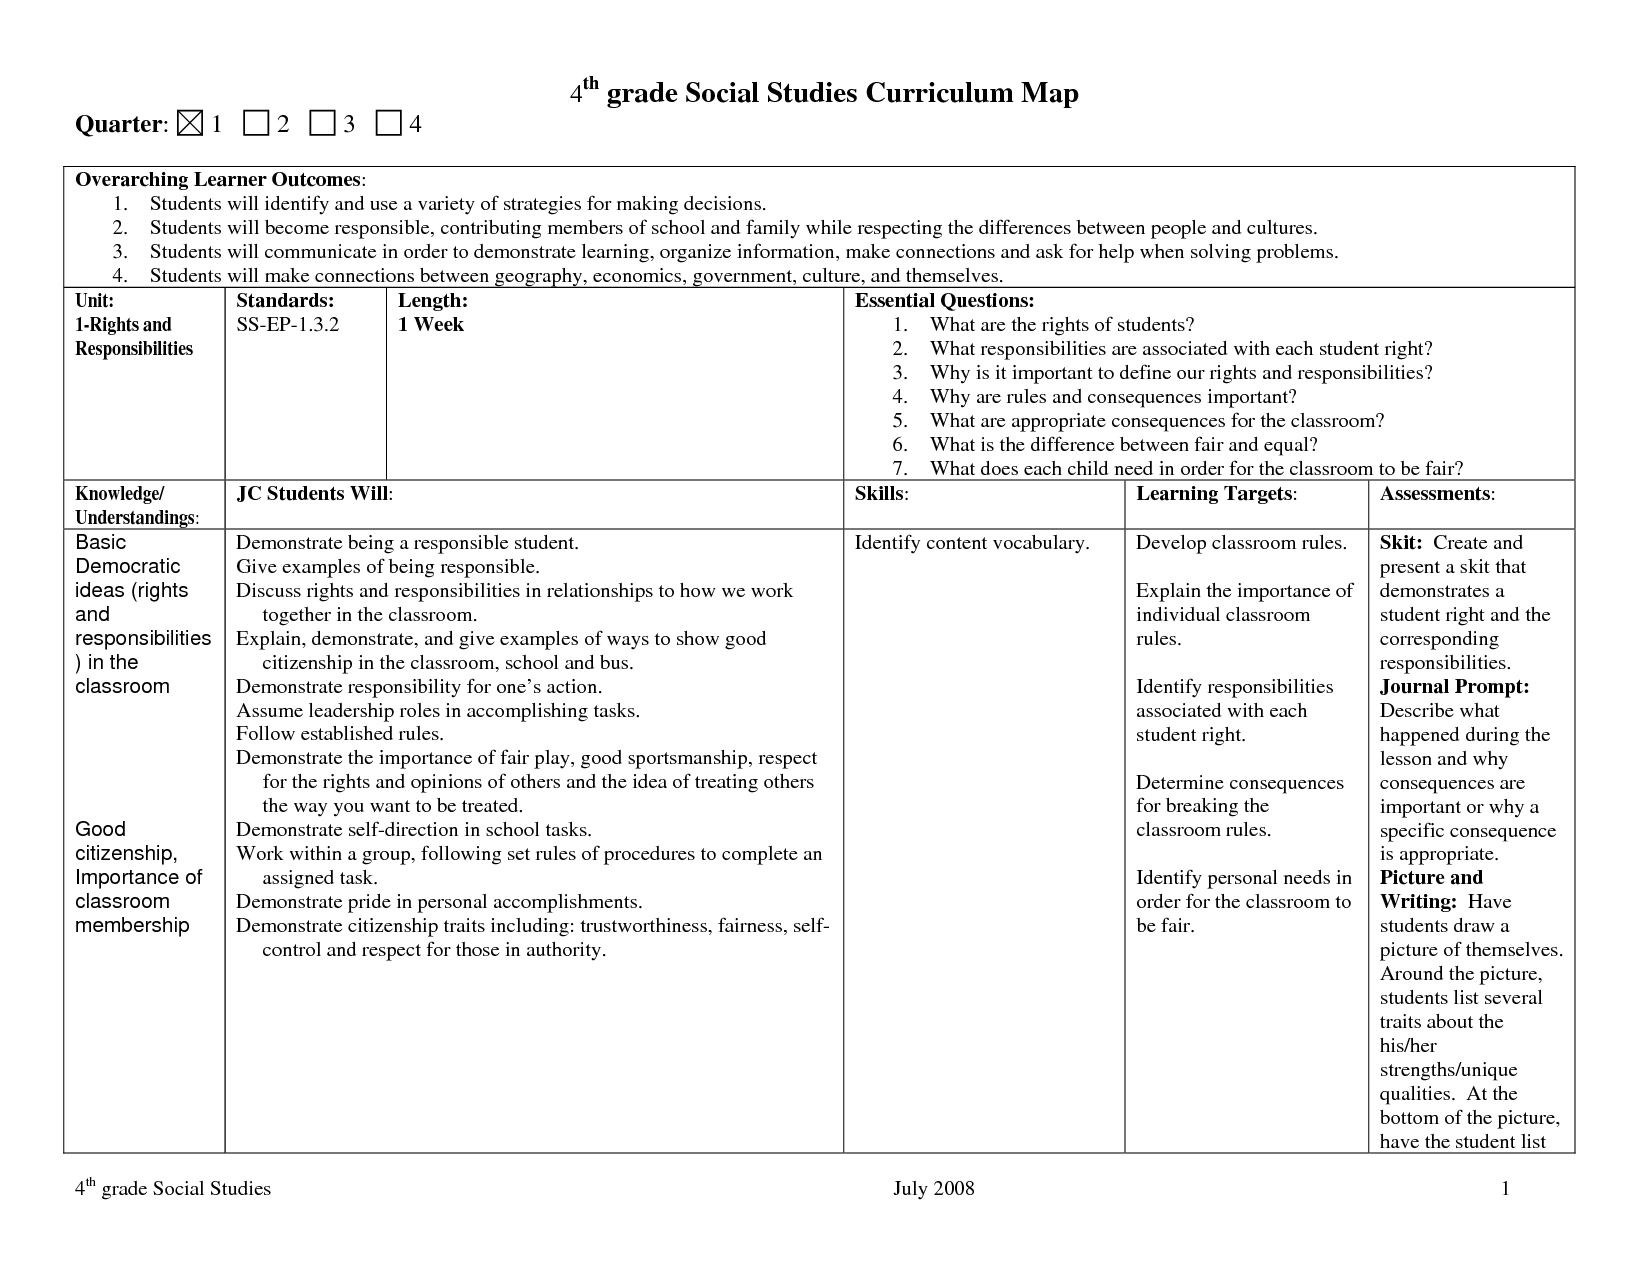 Pinlesa Deel On Classroom | Curriculum Mapping For Blank Curriculum Map Template